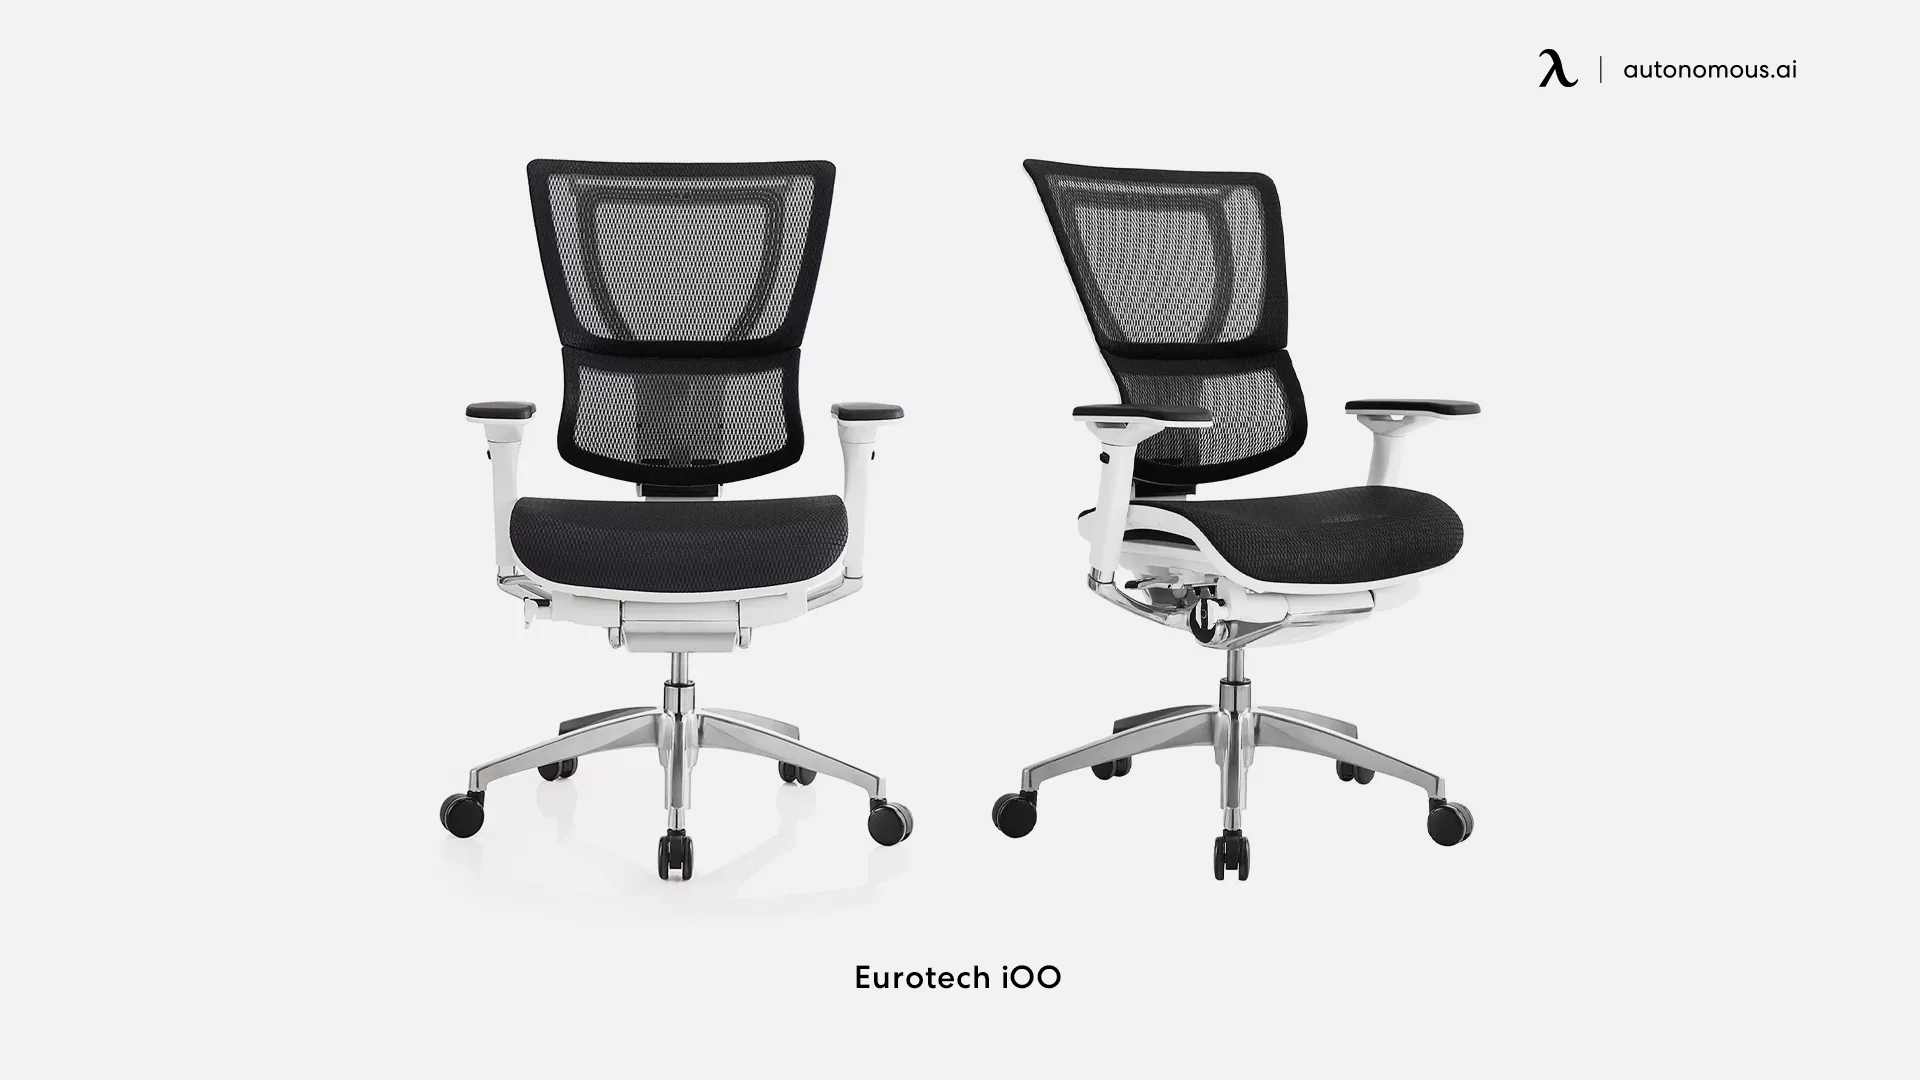 Eurotech iOO mesh office chair